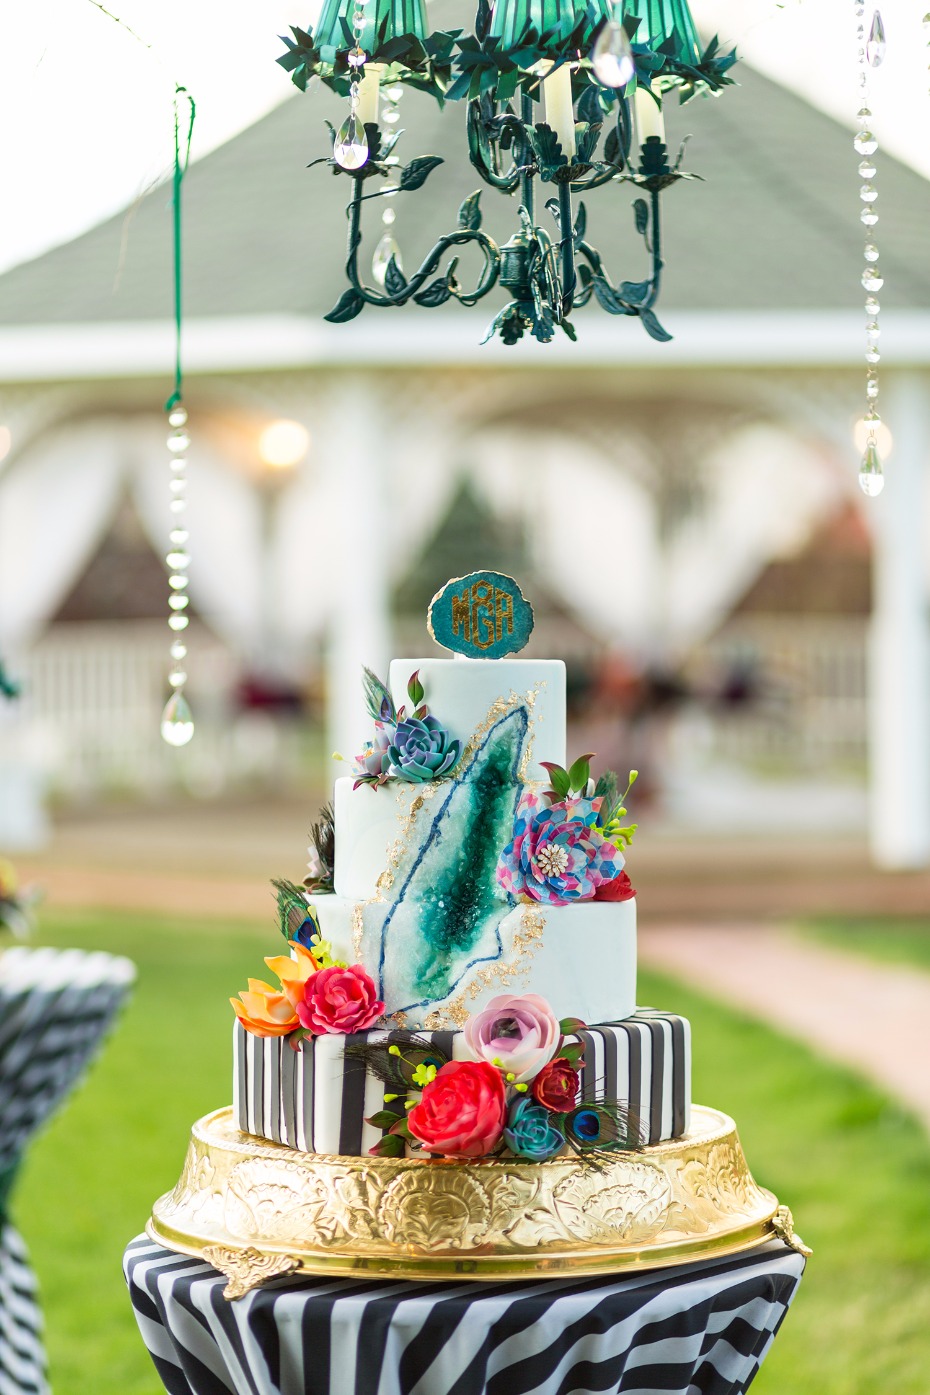 Eclectic geode wedding cake